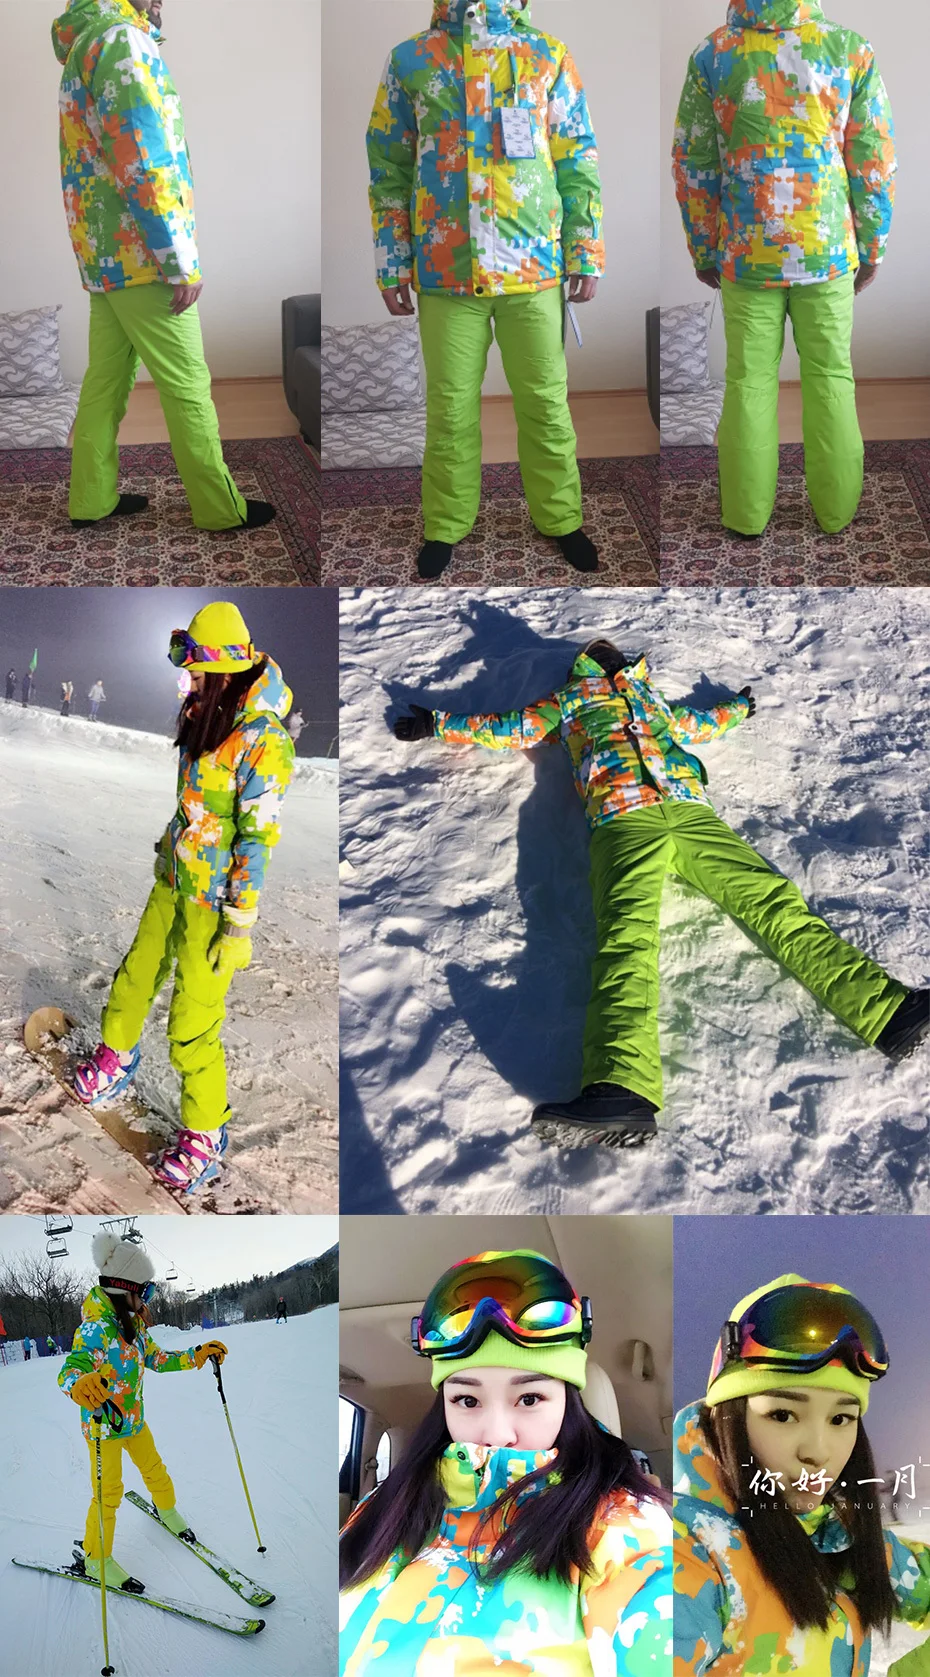 Cheap Jaquetas de esqui